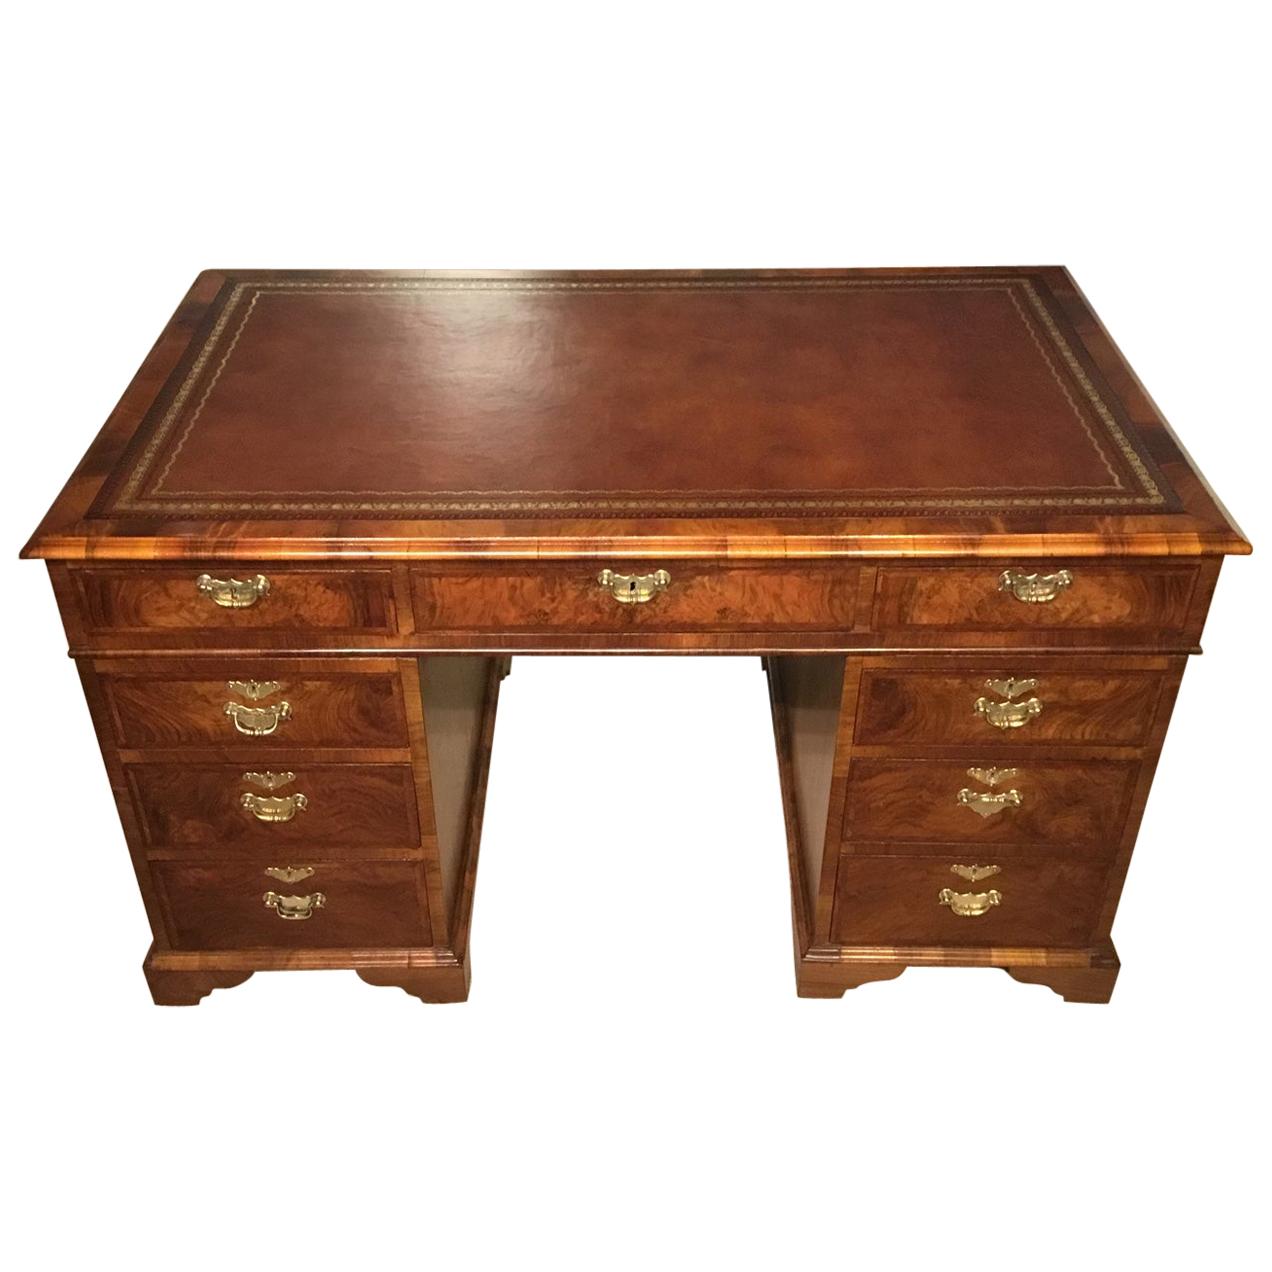 Fine Quality Walnut Edwardian Period Partners Desk in the Georgian Style